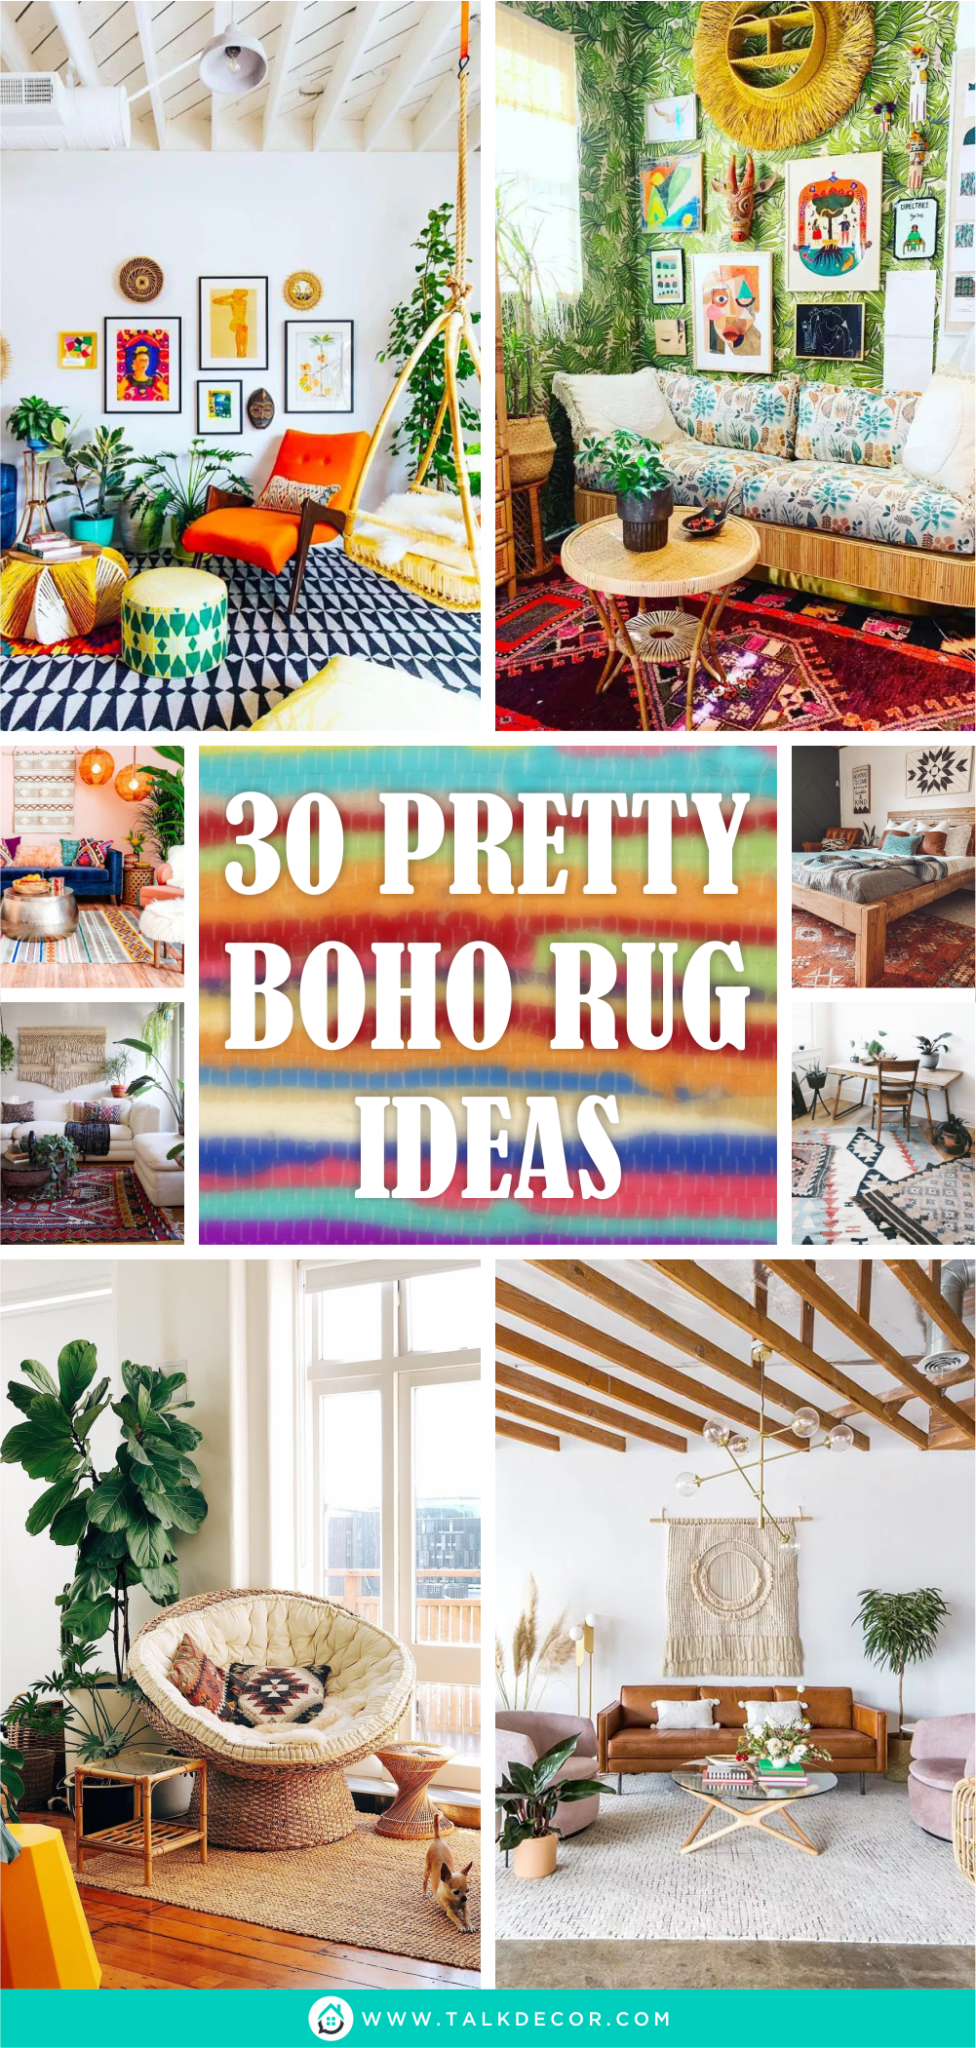 30 Pretty Boho Rug Ideas - Talkdecor